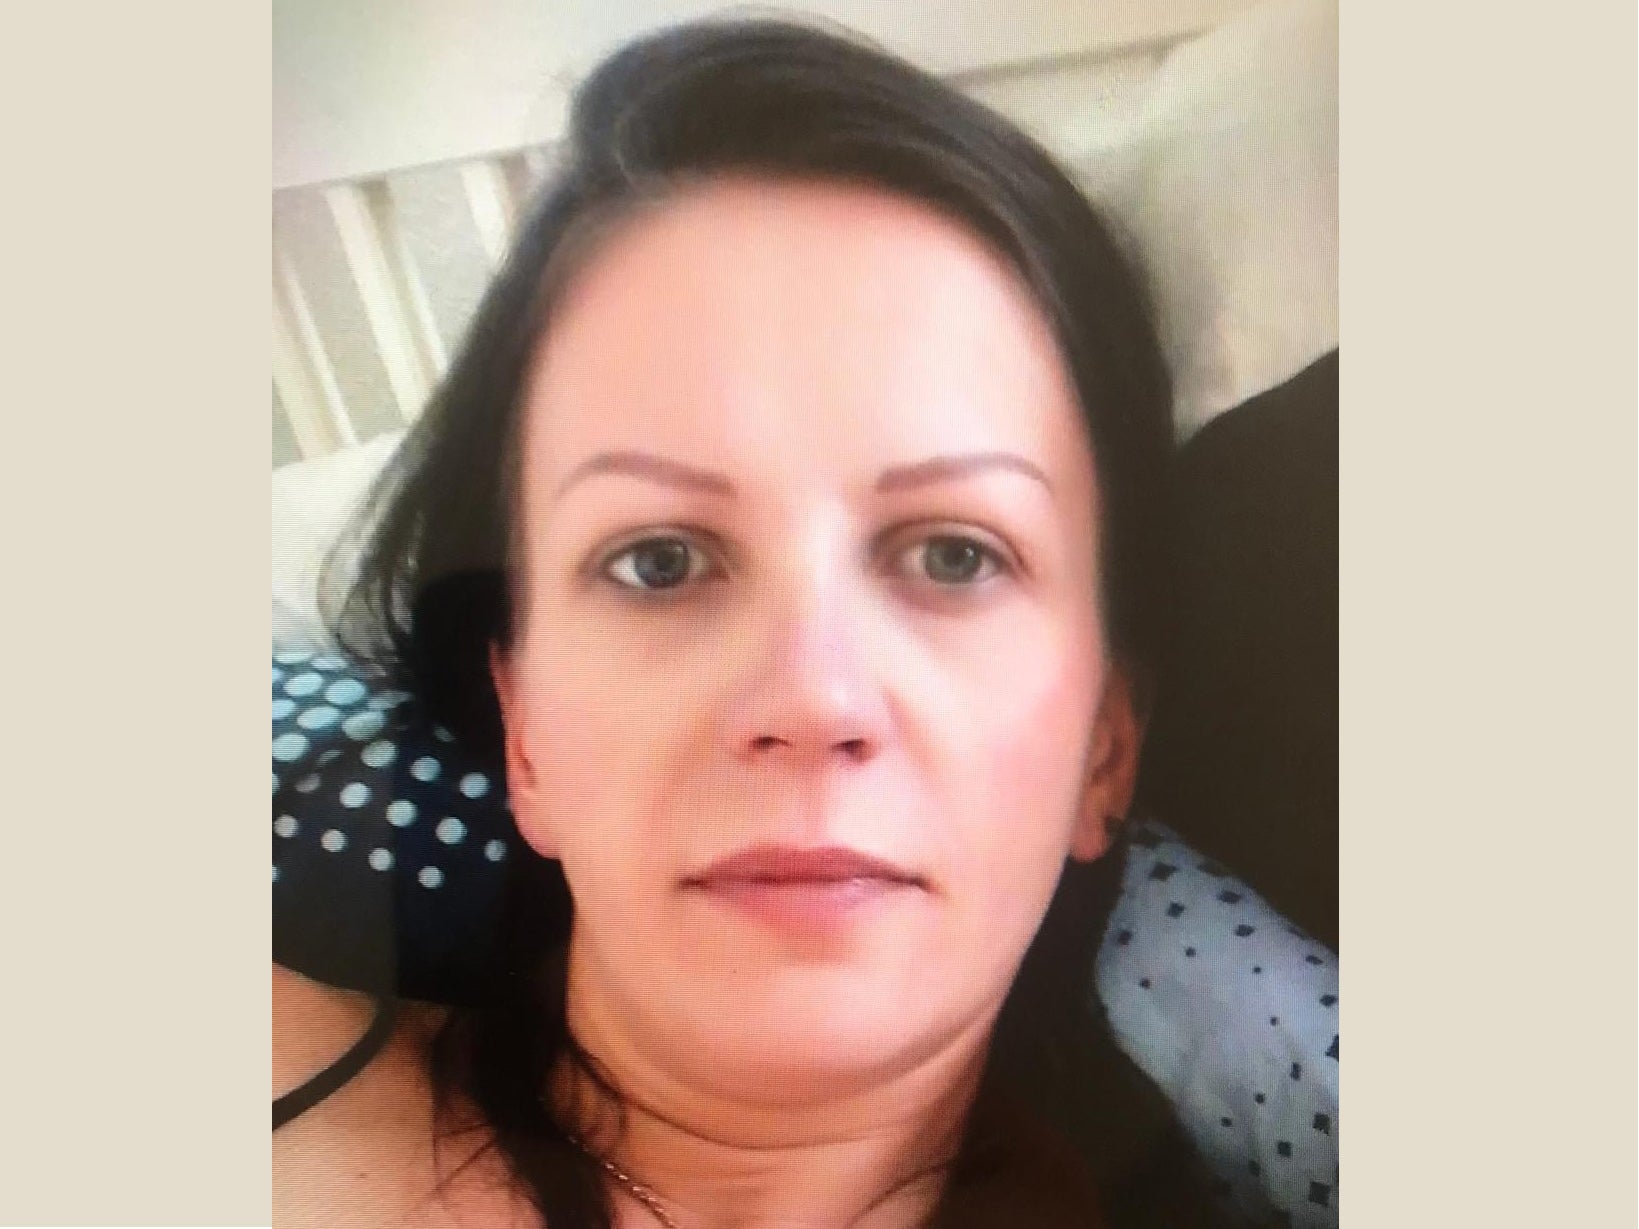 Sandra Zmijan was found dead in the back garden of a house in Hayes, west London